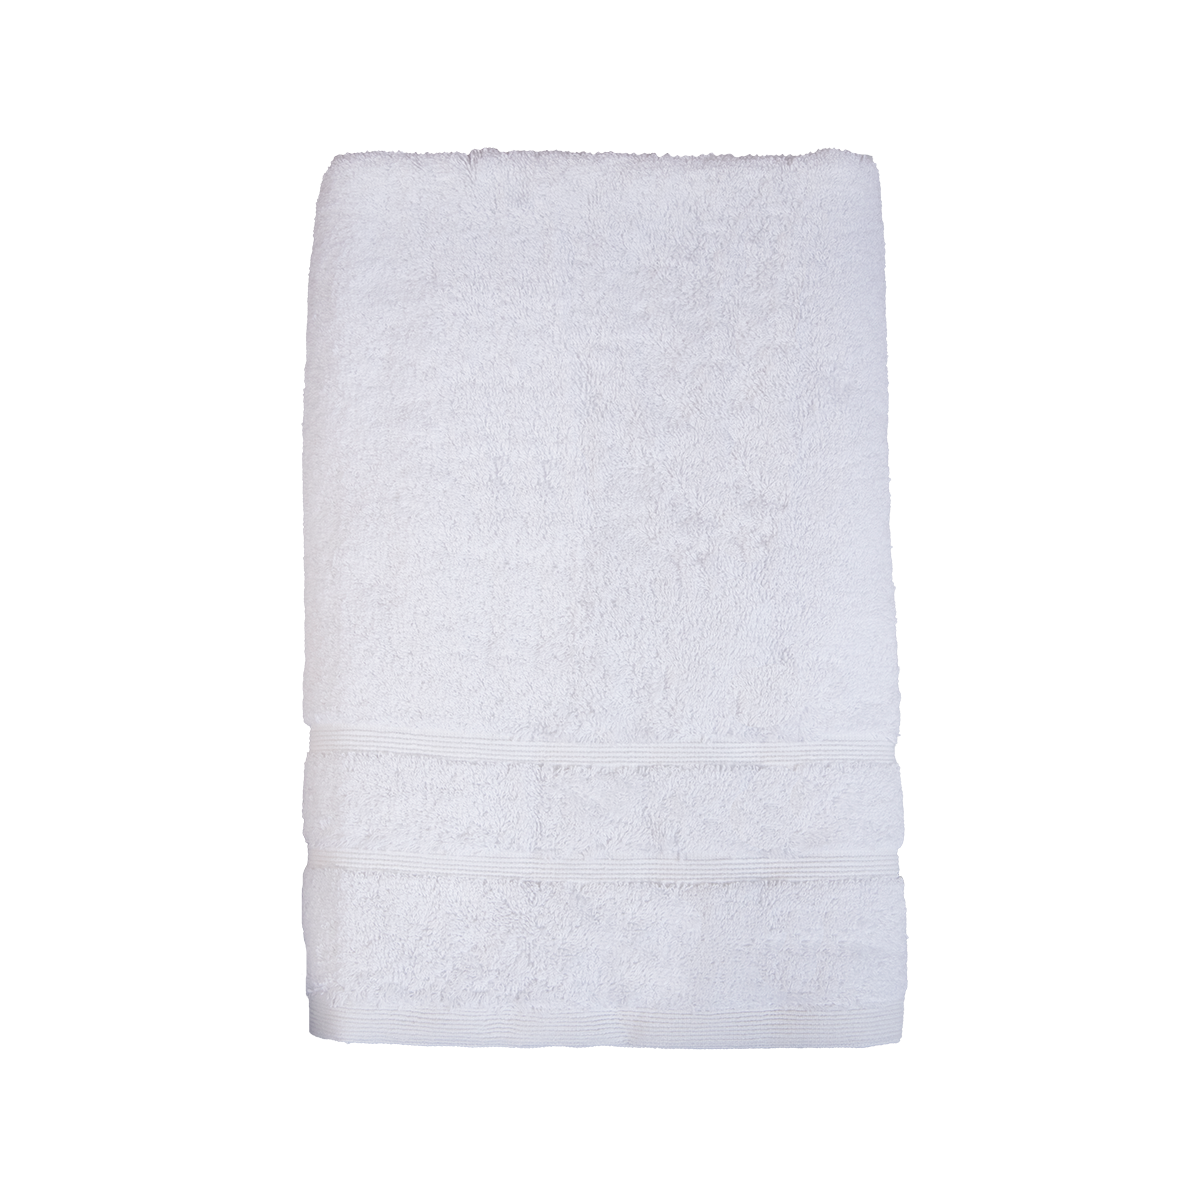 NATURAWALK Handtuch Bio-Baumwolle Milano Deluxe White